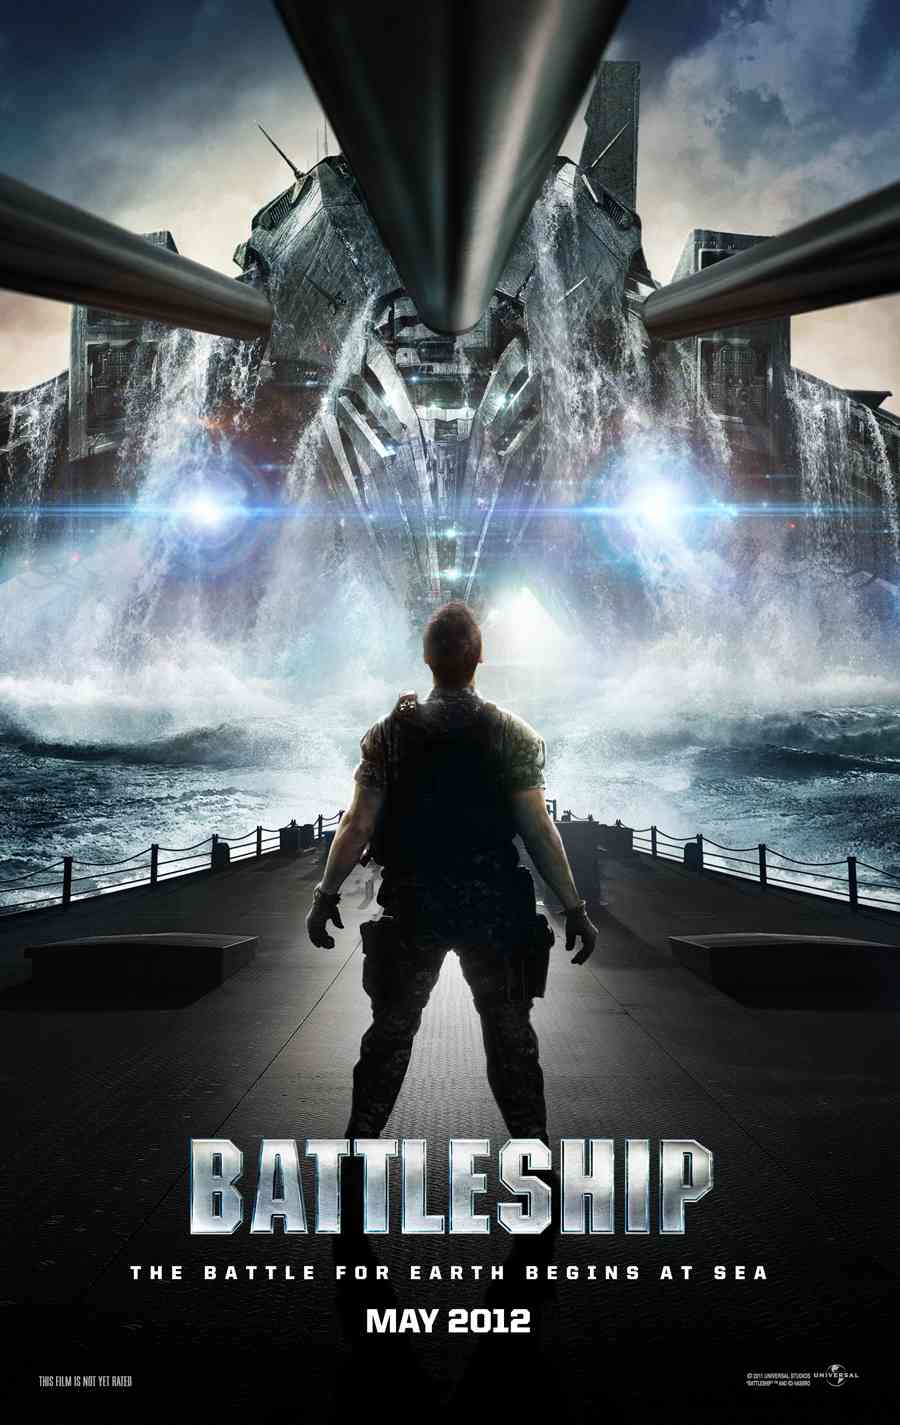 FULL MOVIE: Battleship (2012) [Action]